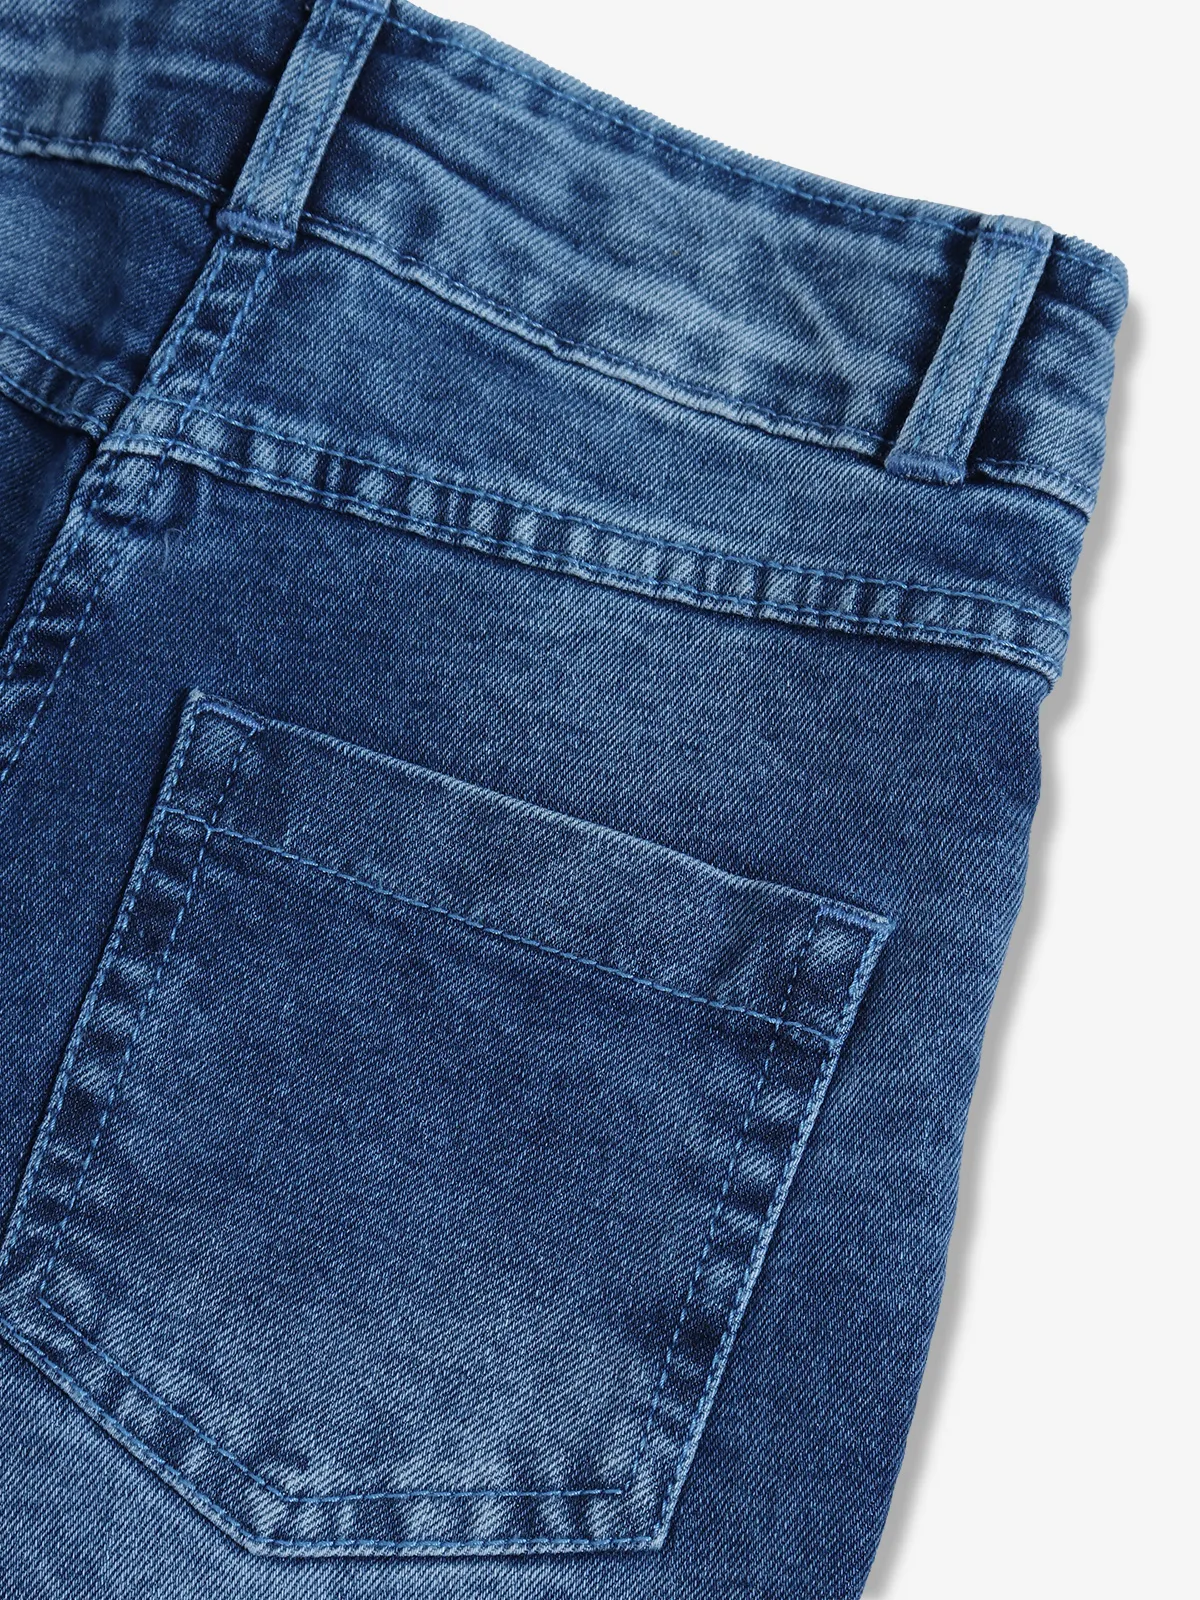 BARBIE blue washed jeans